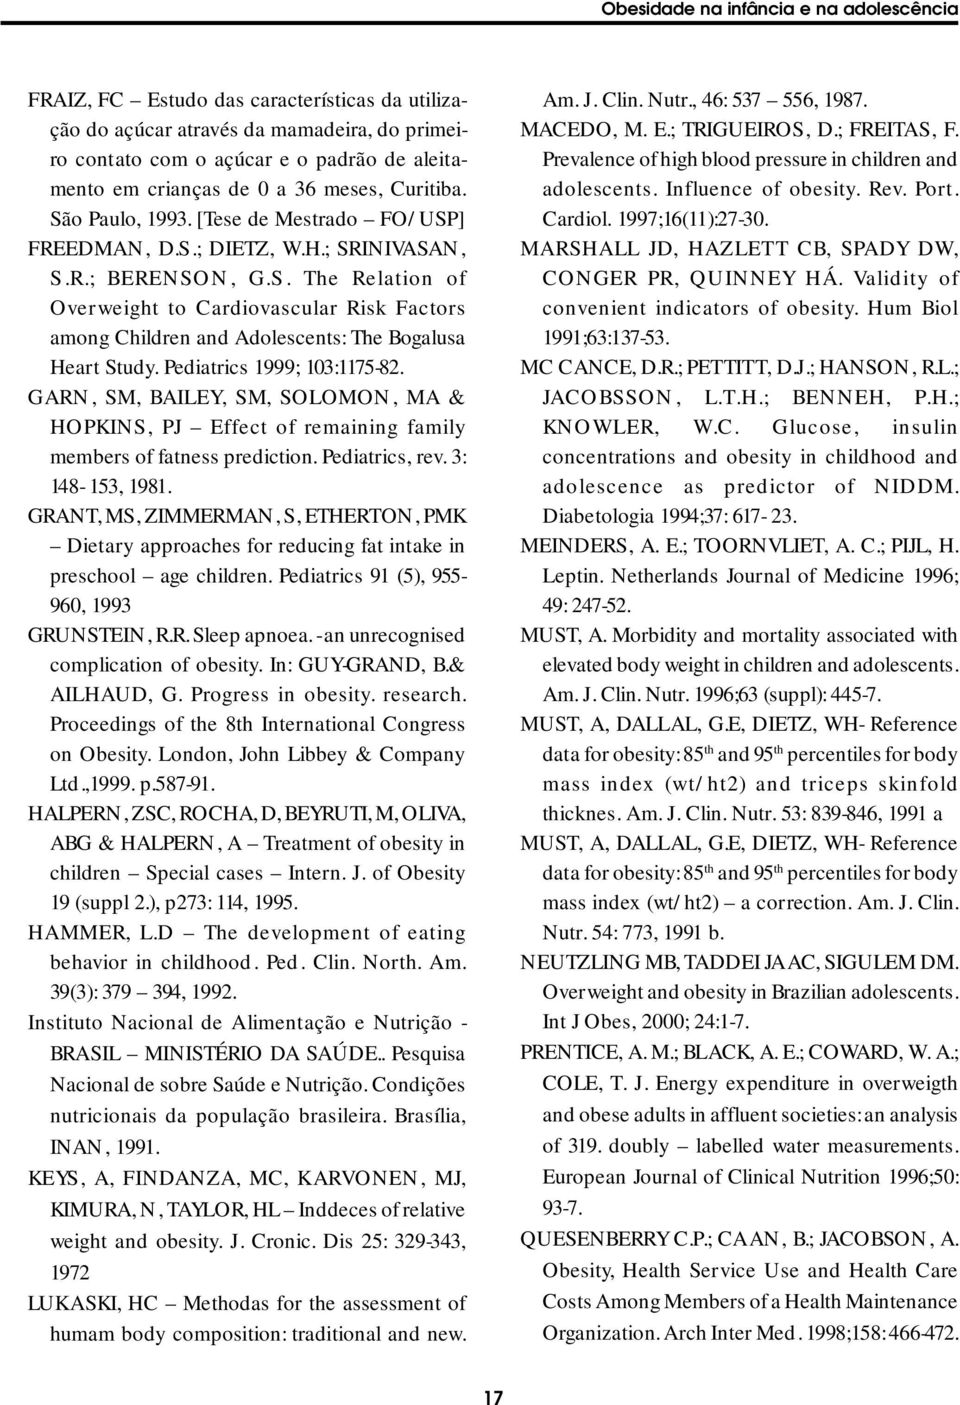 Pediatrics 1999; 103:1175-82. GARN, SM, BAILEY, SM, SOLOMON, MA & HOPKINS, PJ Effect of remaining family members of fatness prediction. Pediatrics, rev. 3: 148-153, 1981.